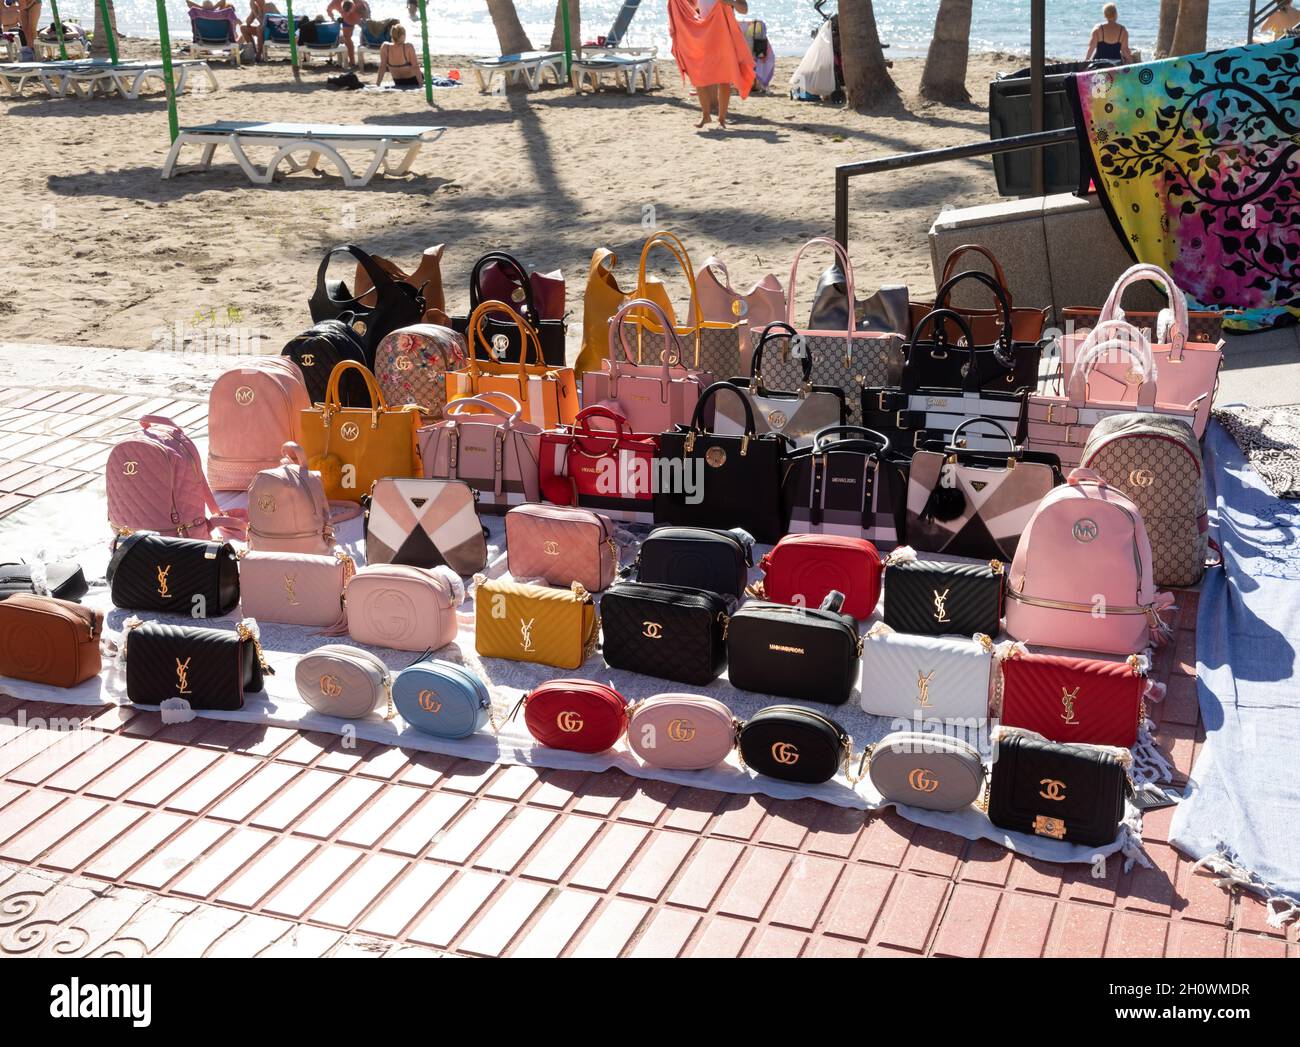 counterfeit designer brand handbags on sale in Costa Adeje, Tenerife Stock Photo